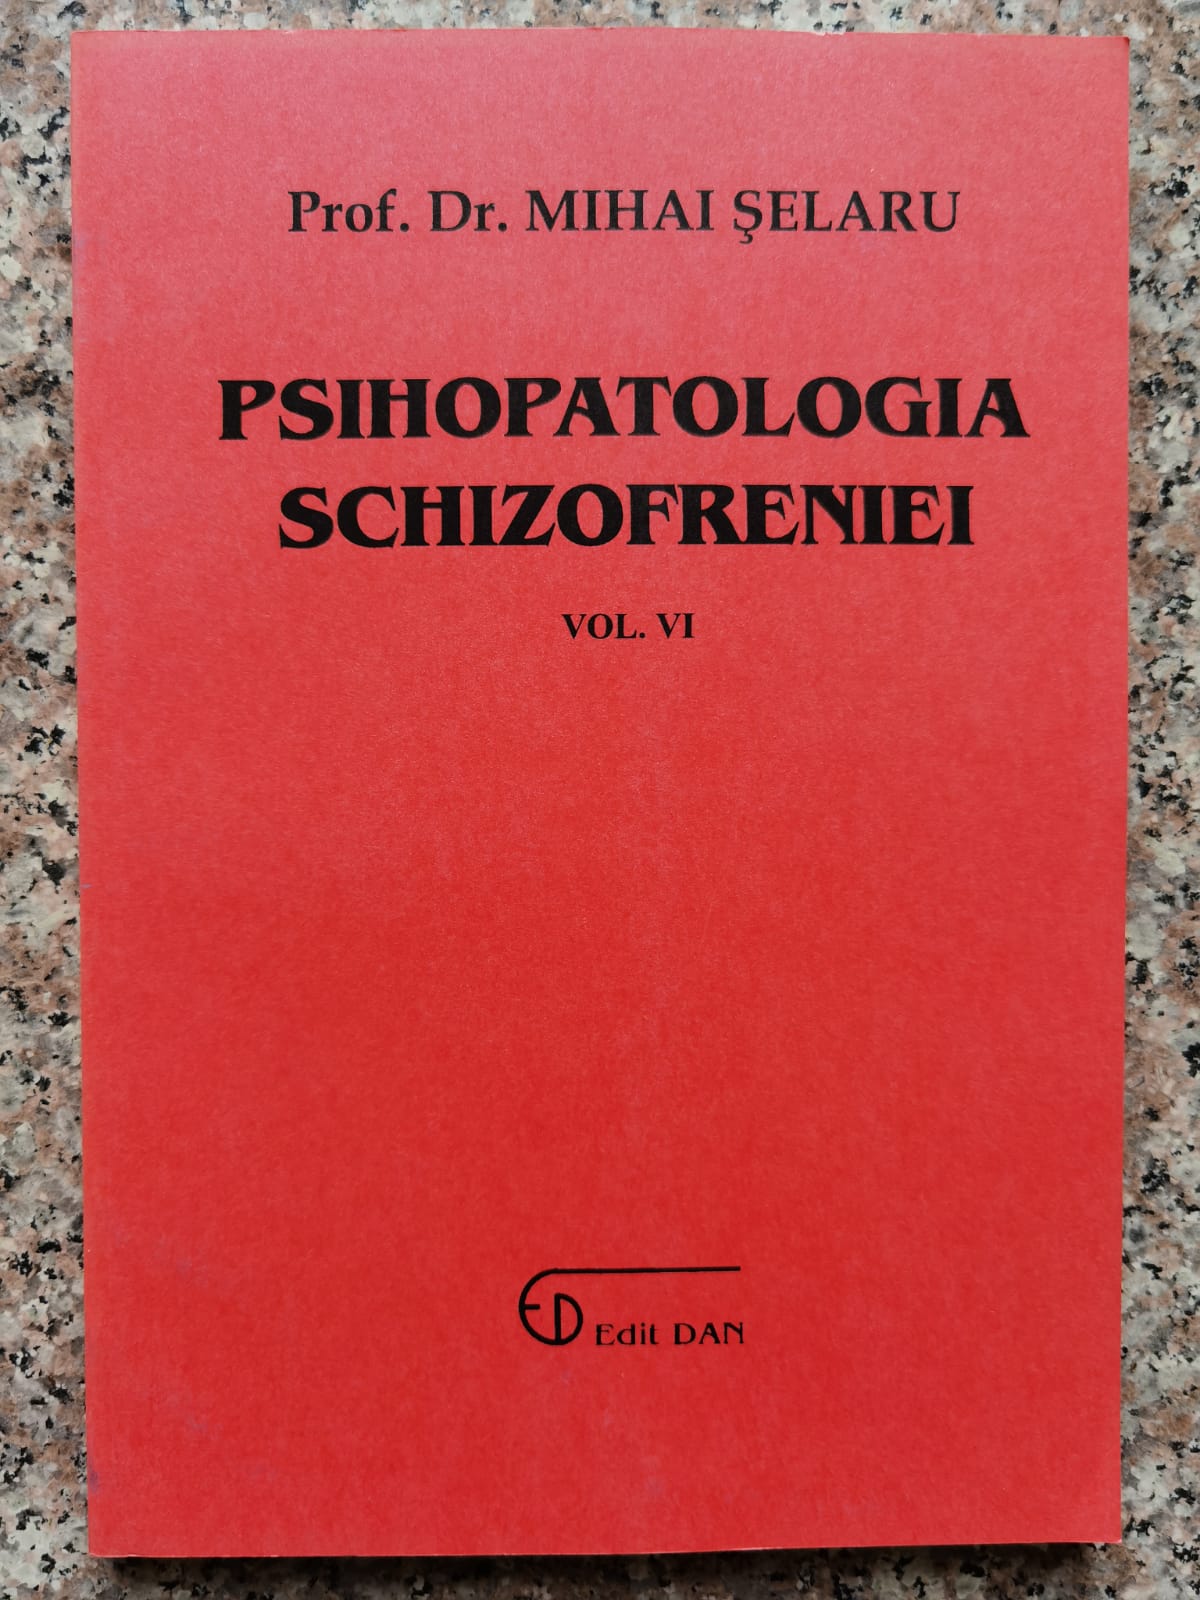 psihopatologia schizofreniei vol.6                                                                   mihai selaru                                                                                        